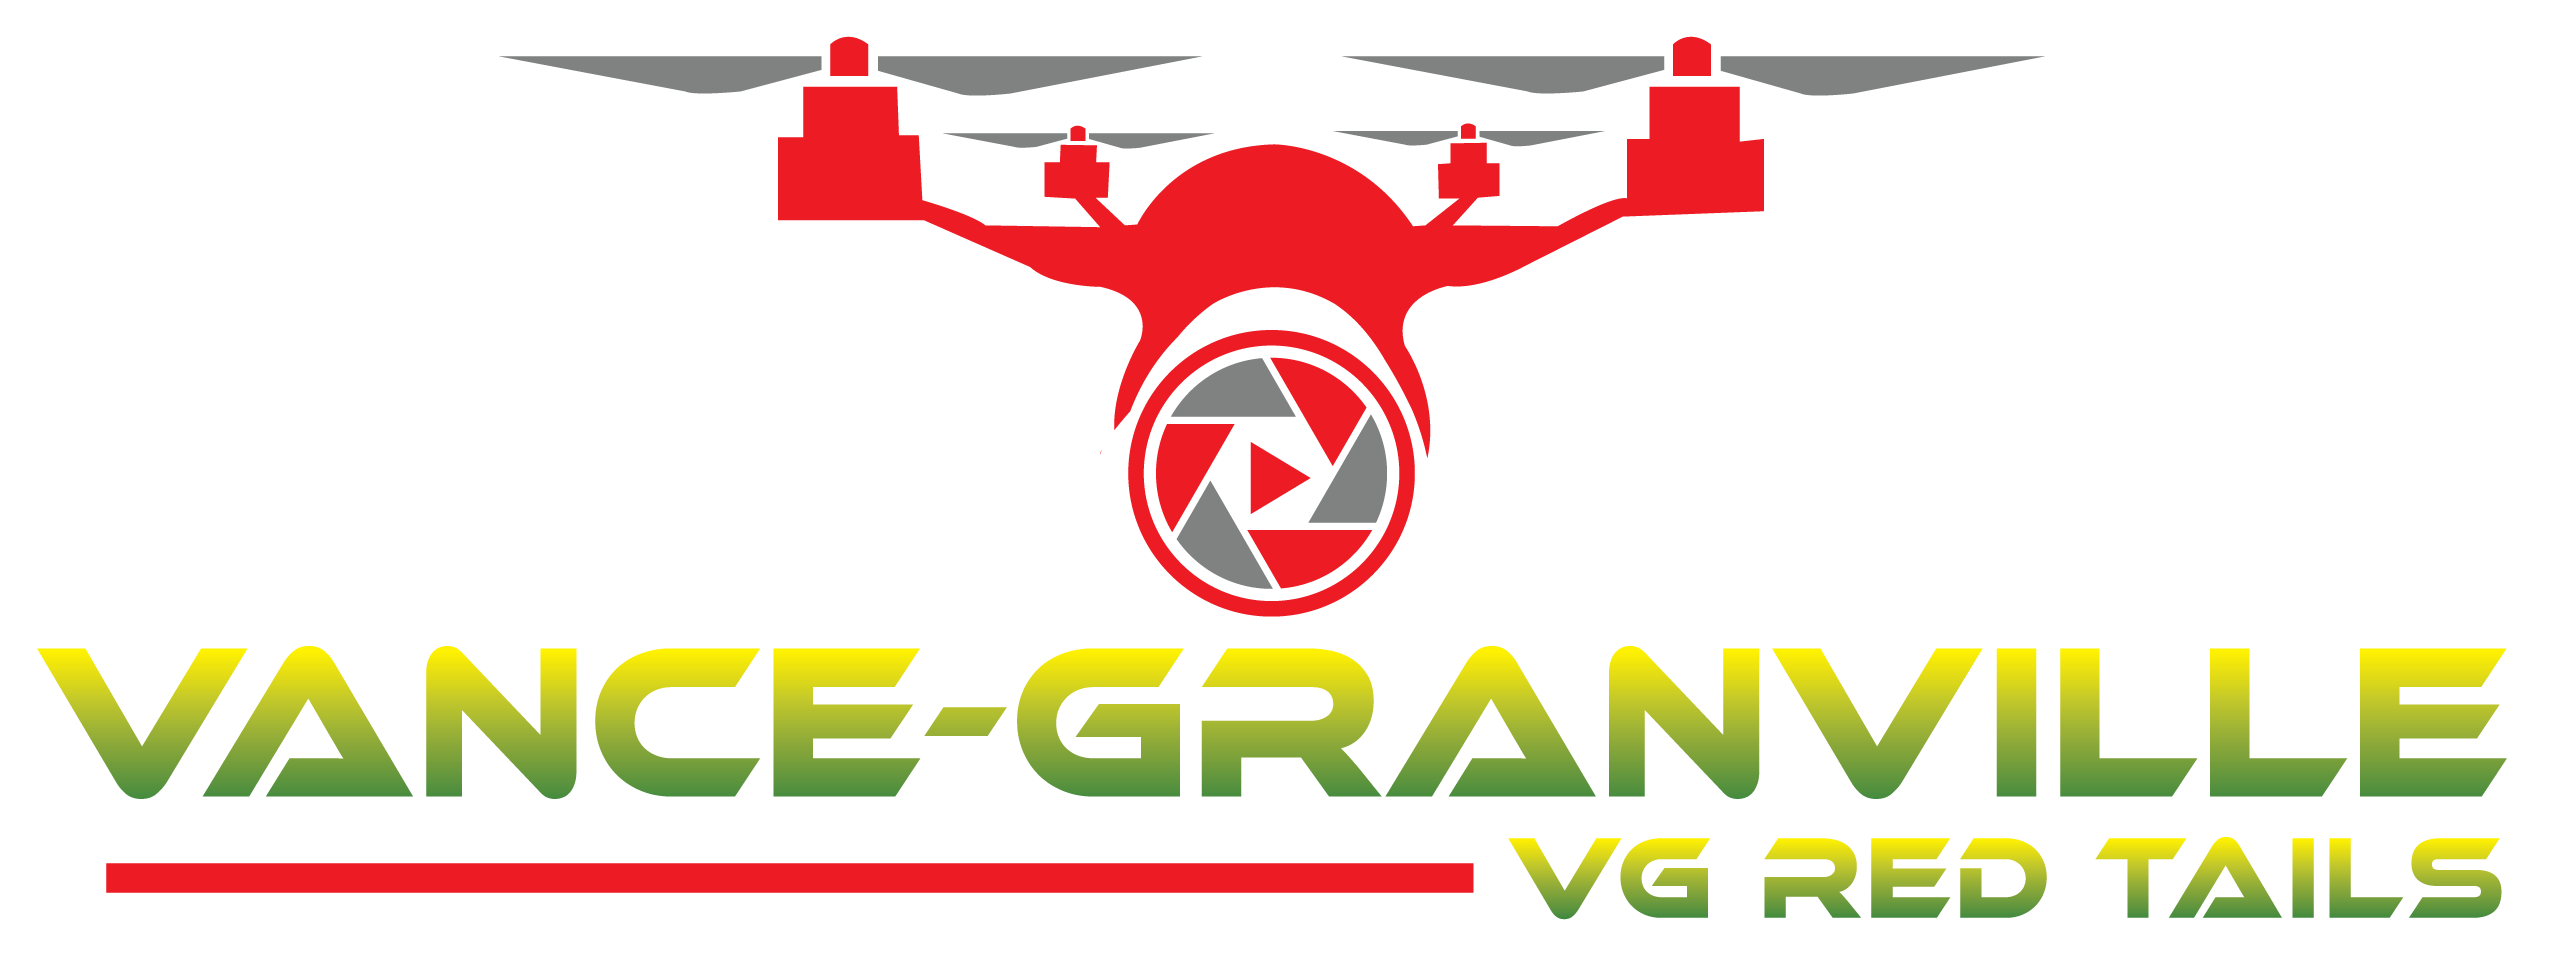 Vance-Granville VG Red Tails